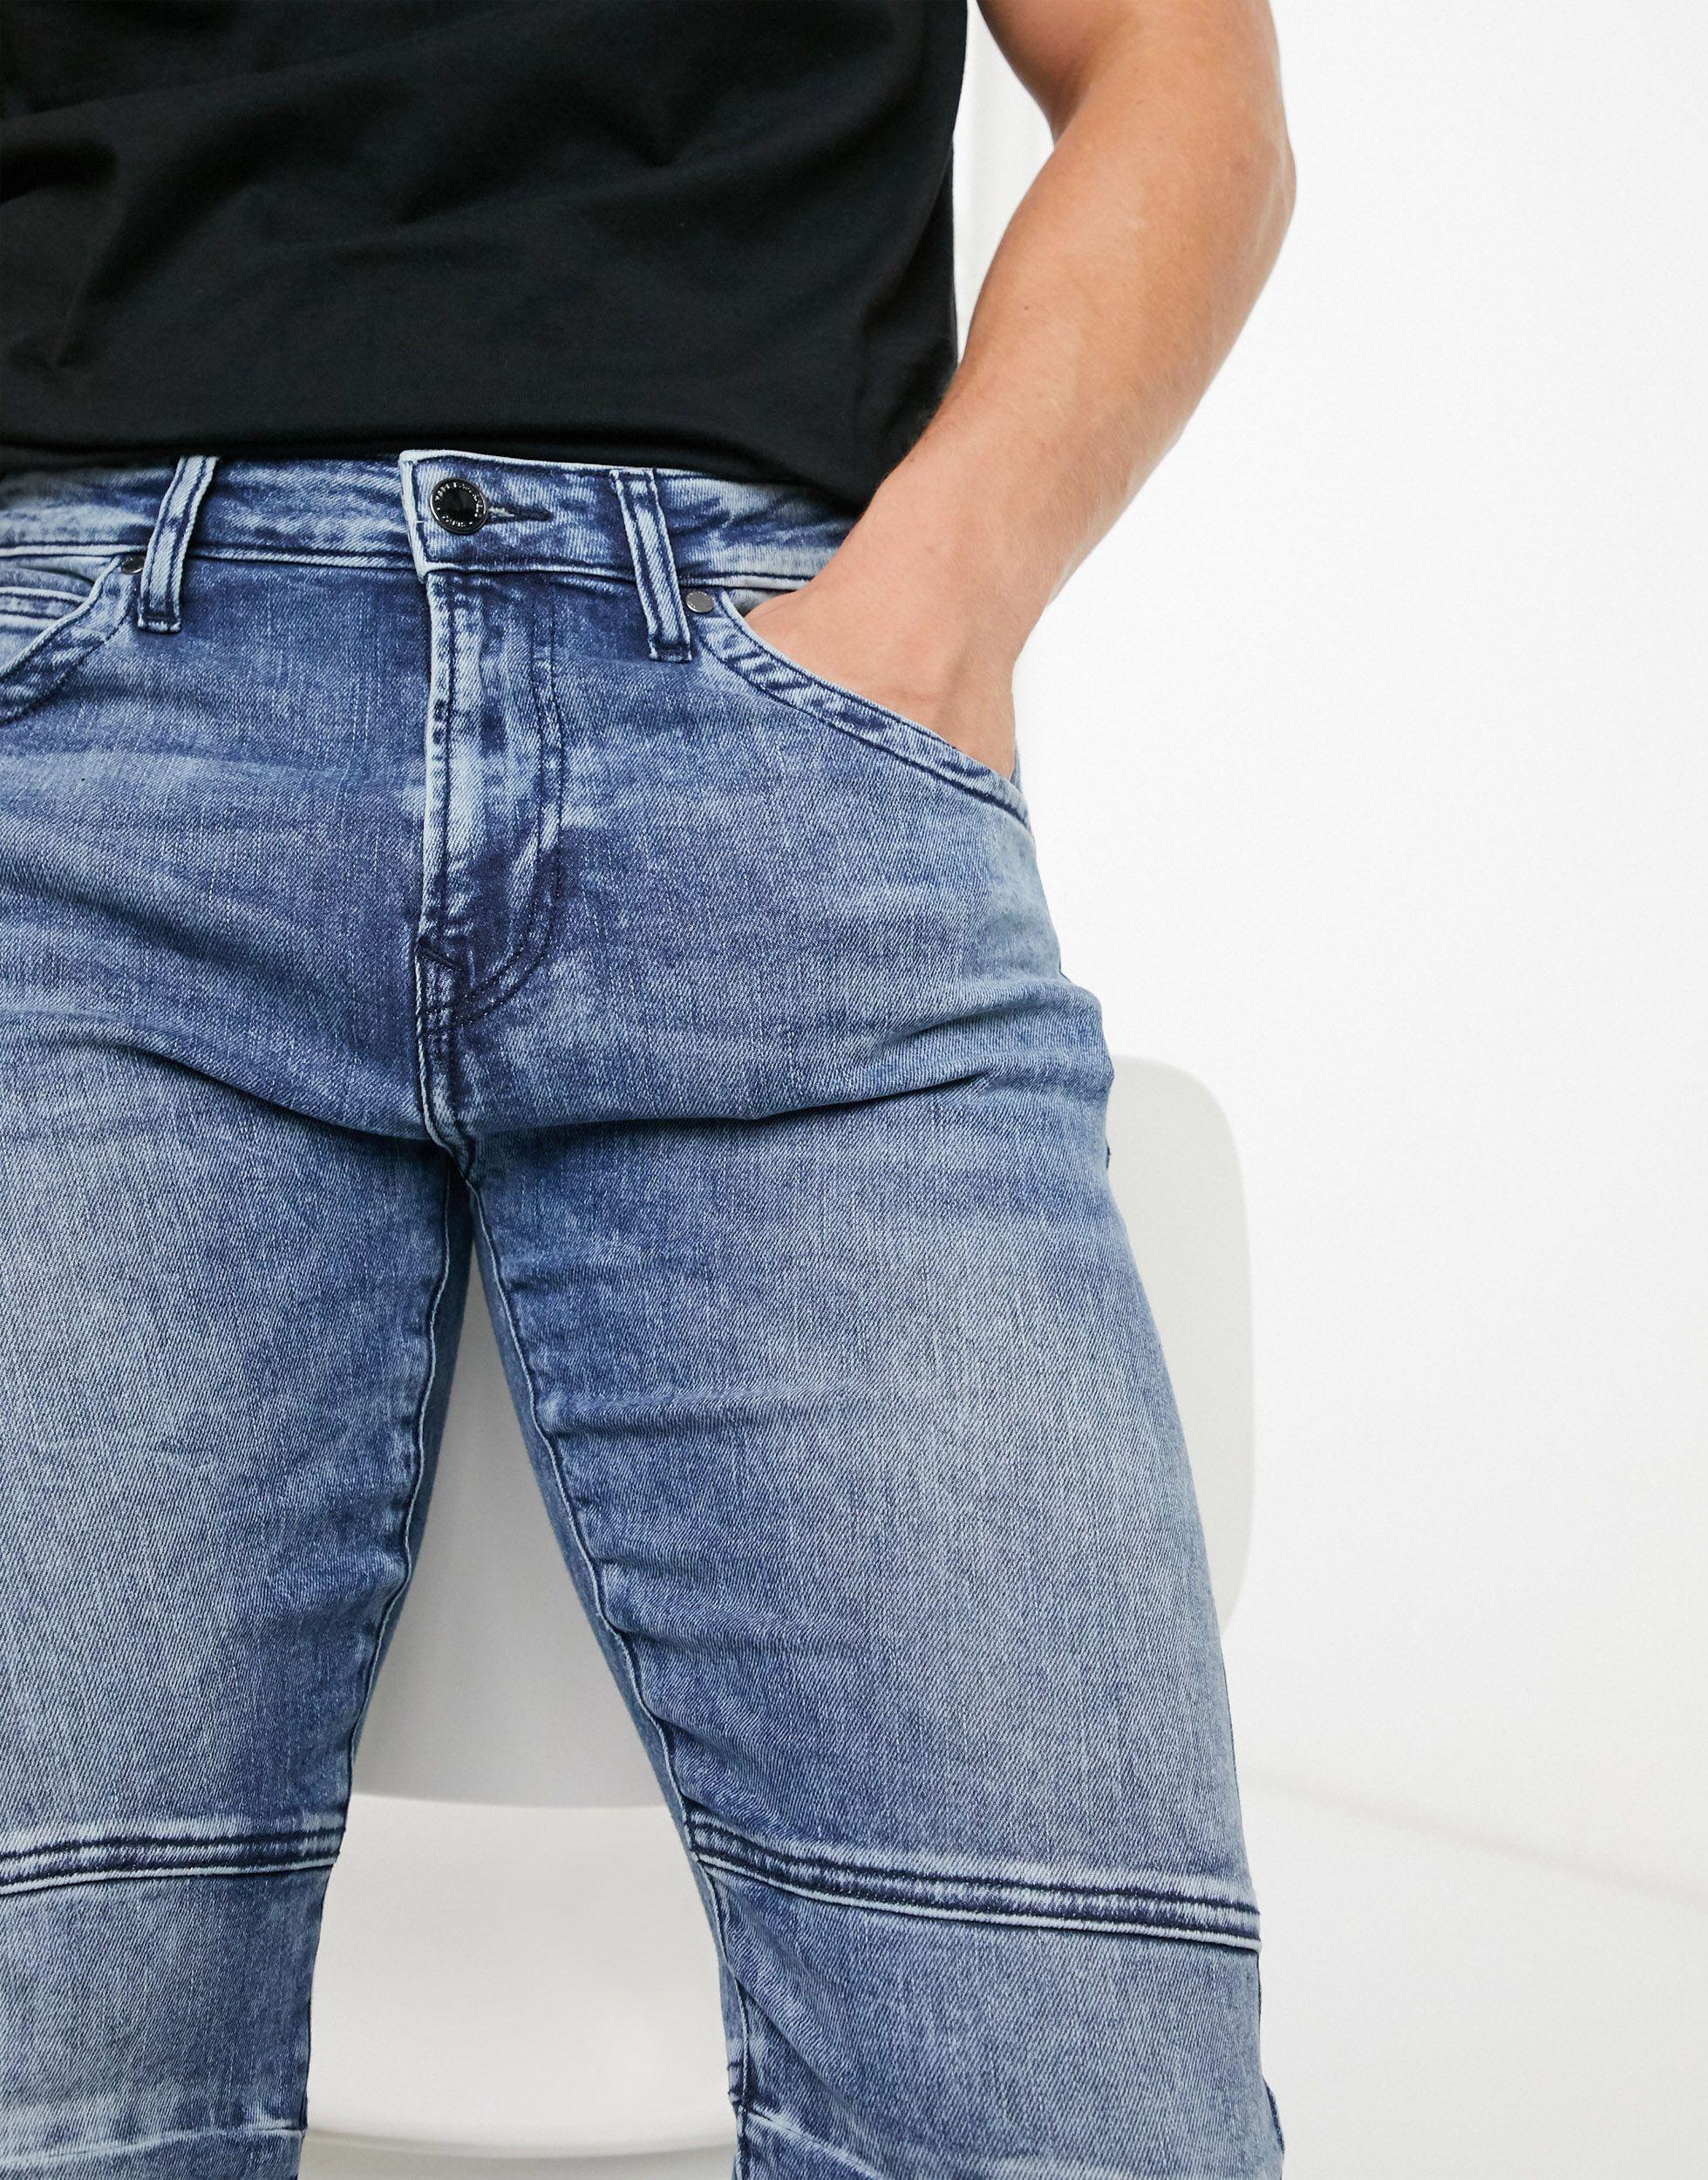 Karl Lagerfeld Washed Denim Moto Jeans in Blue for Men - Lyst